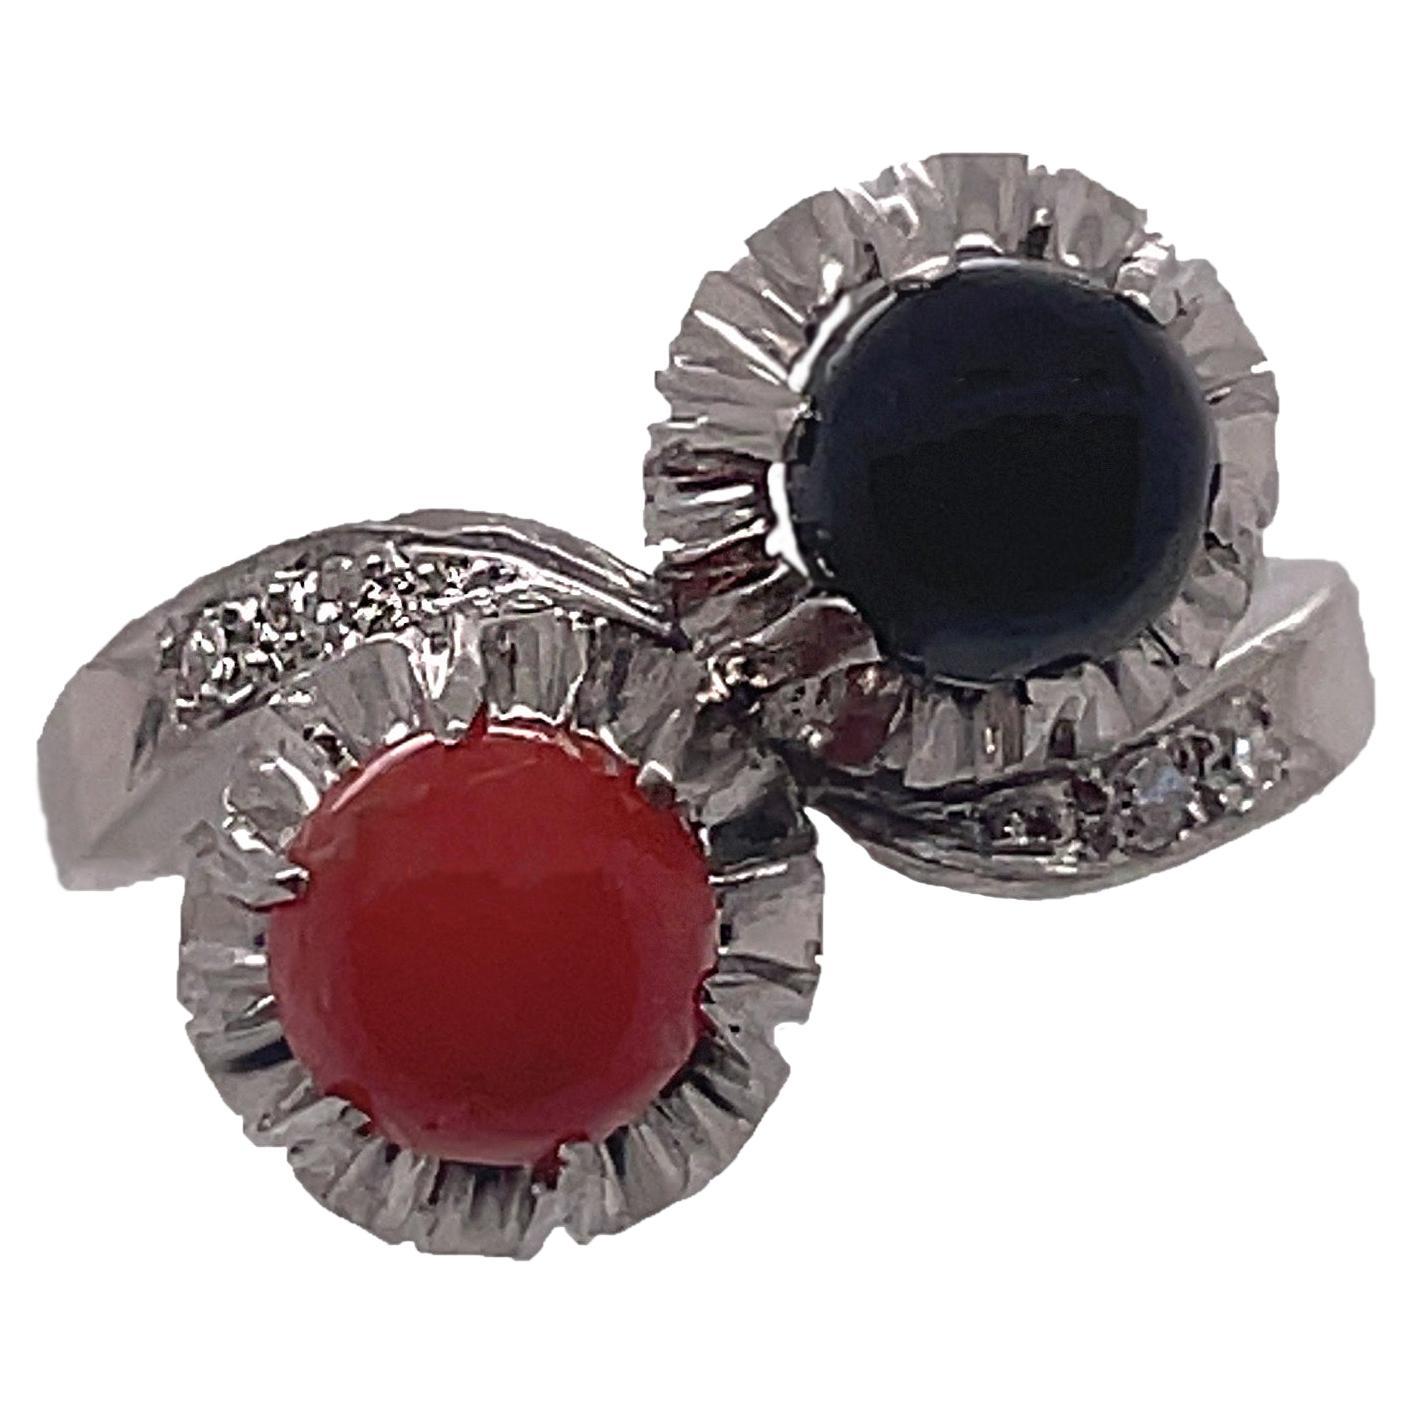 1925 Art Deco Platinum Red Coral & Black Jade Diamond Ring, Love and Pain